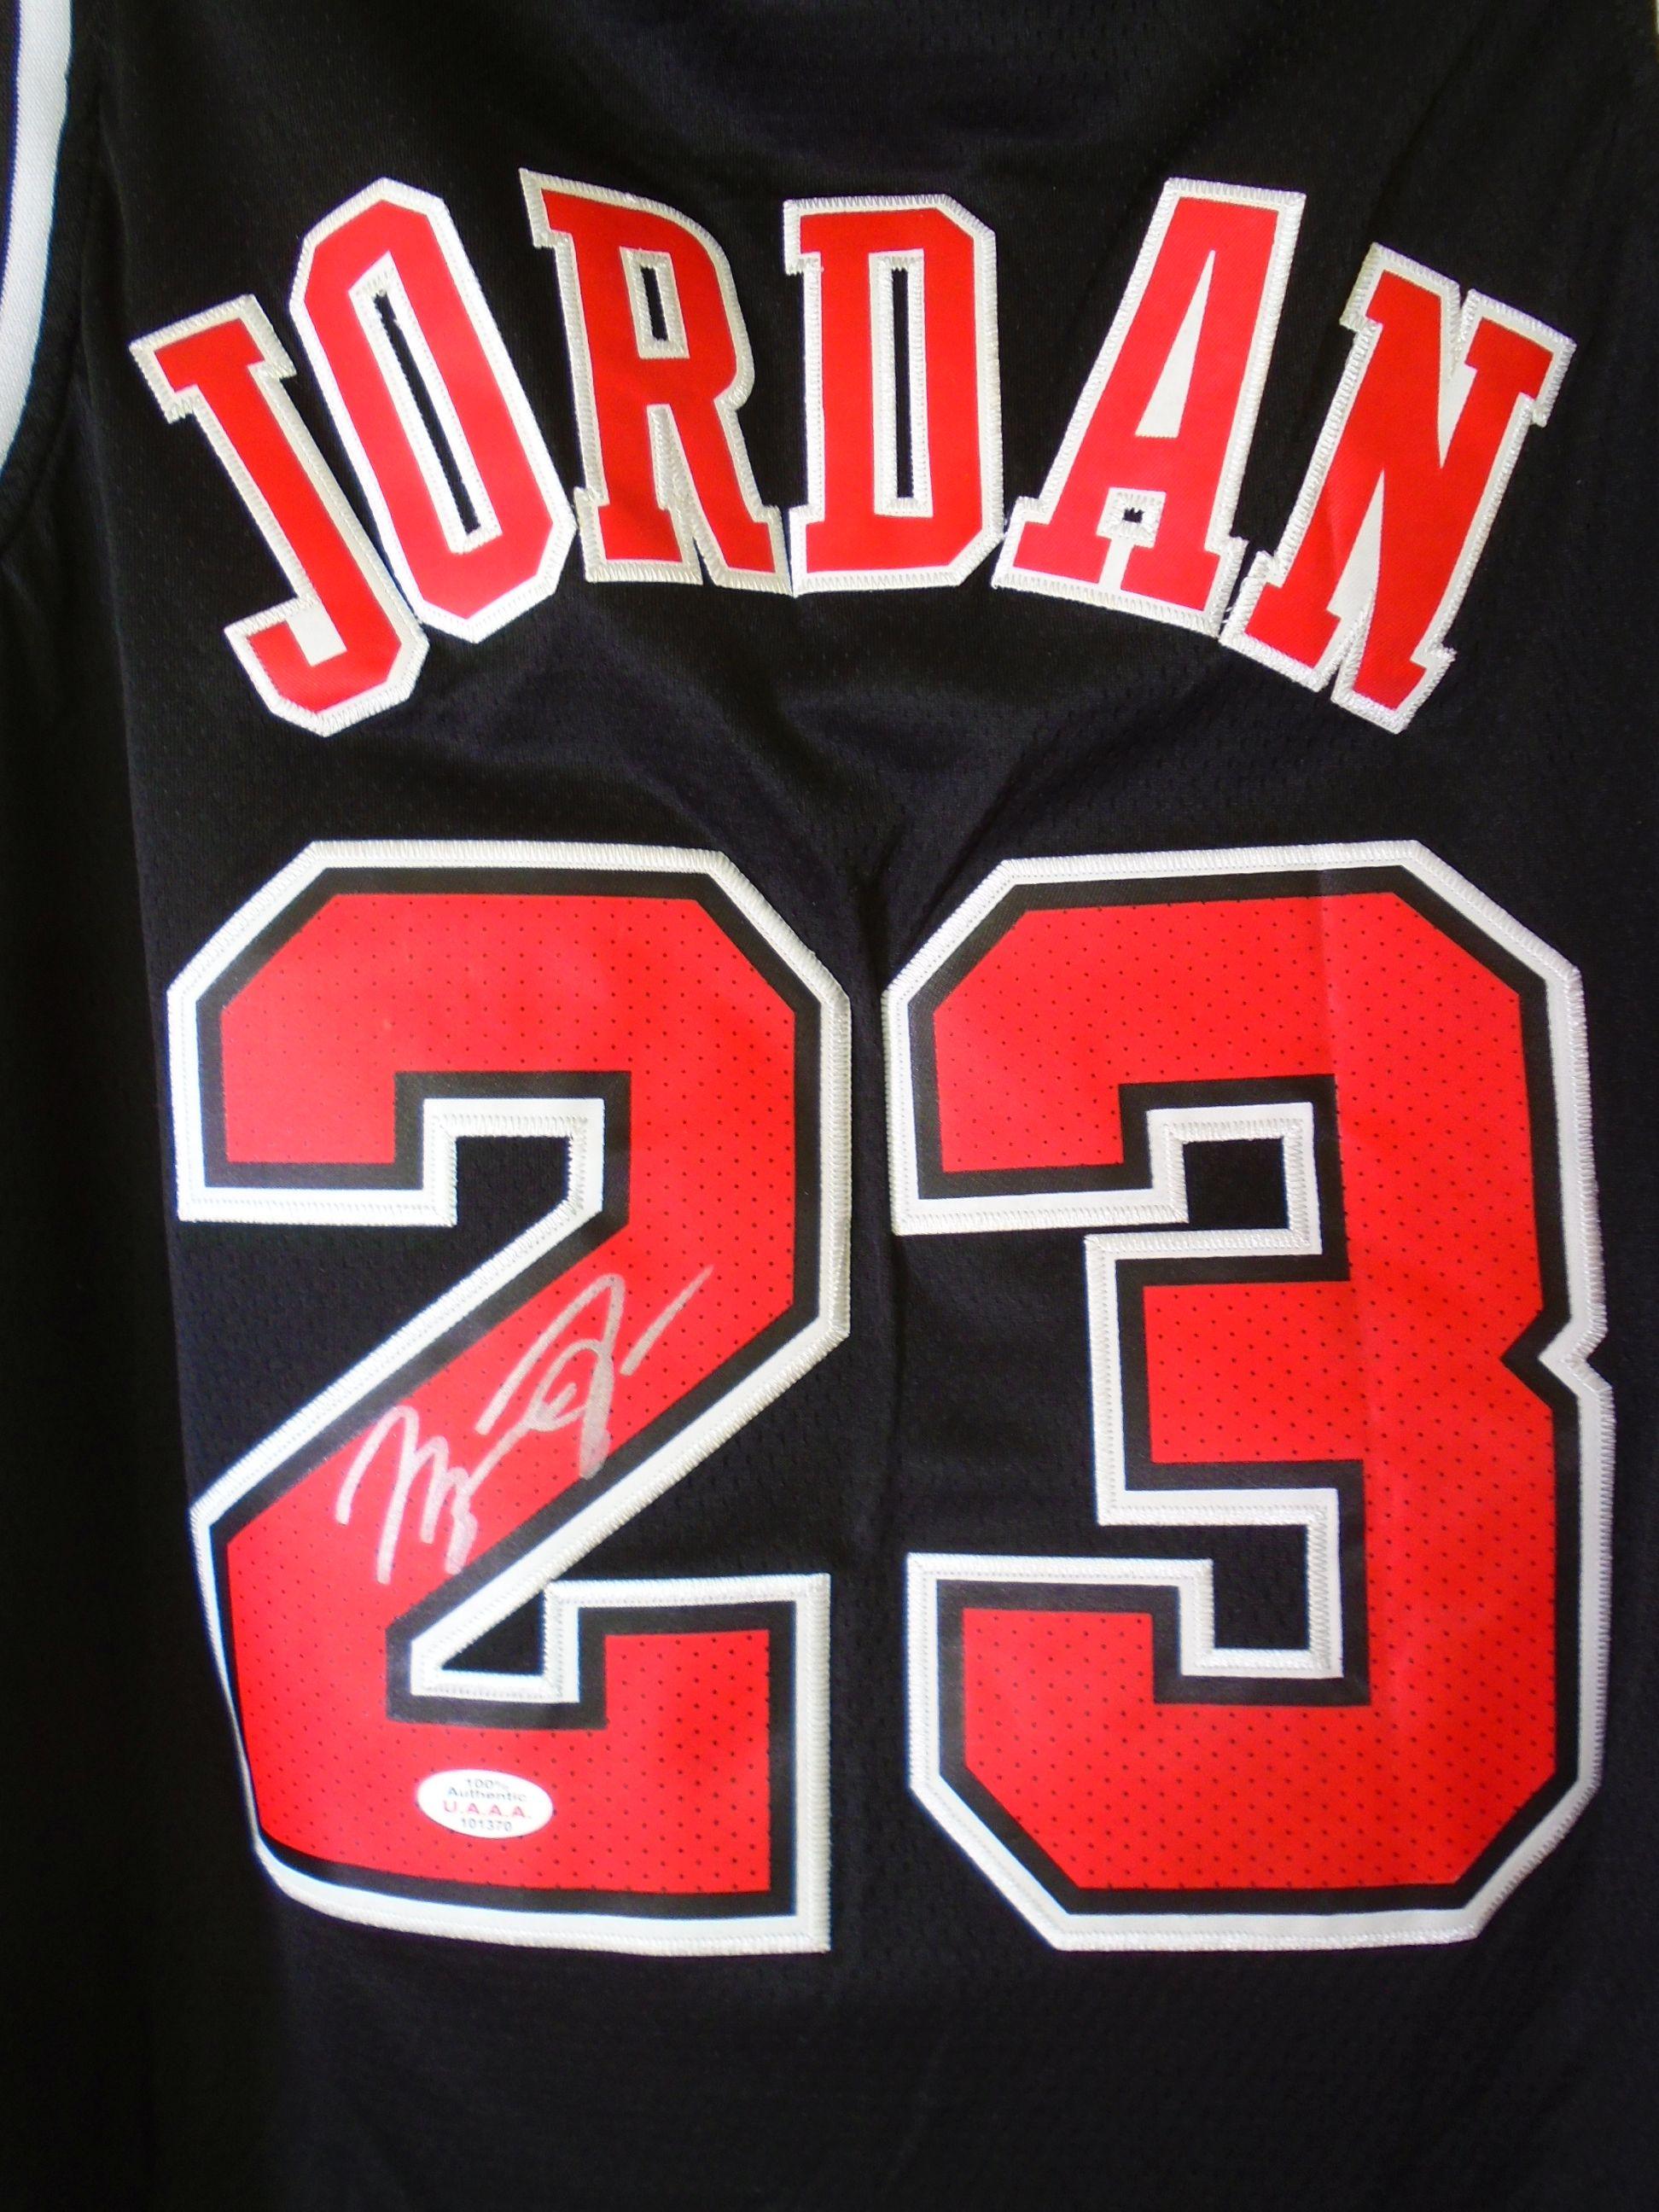 Michael Jordan - NBA Hall of Fame - Signed Chicago Bulls Jersey.